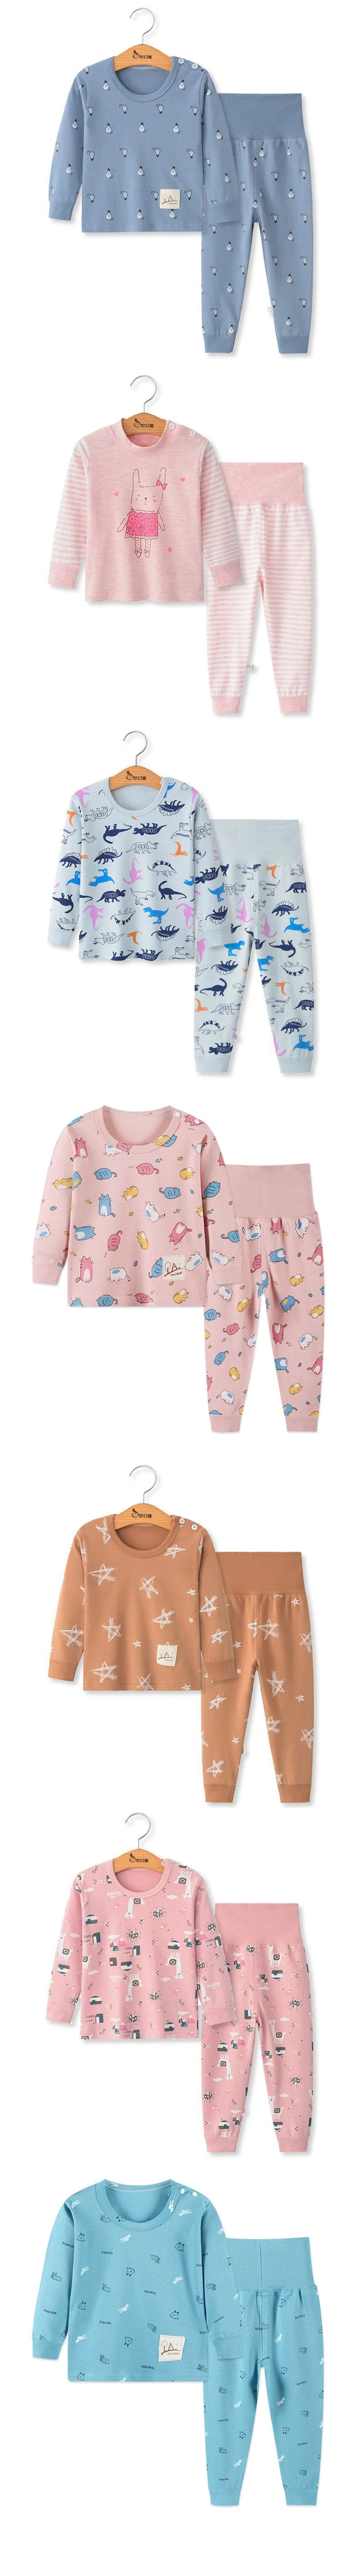 Little Boys Girls Snug-Fit Pajamas Winter Long Sleeve Sets Pjs Kids Clothes